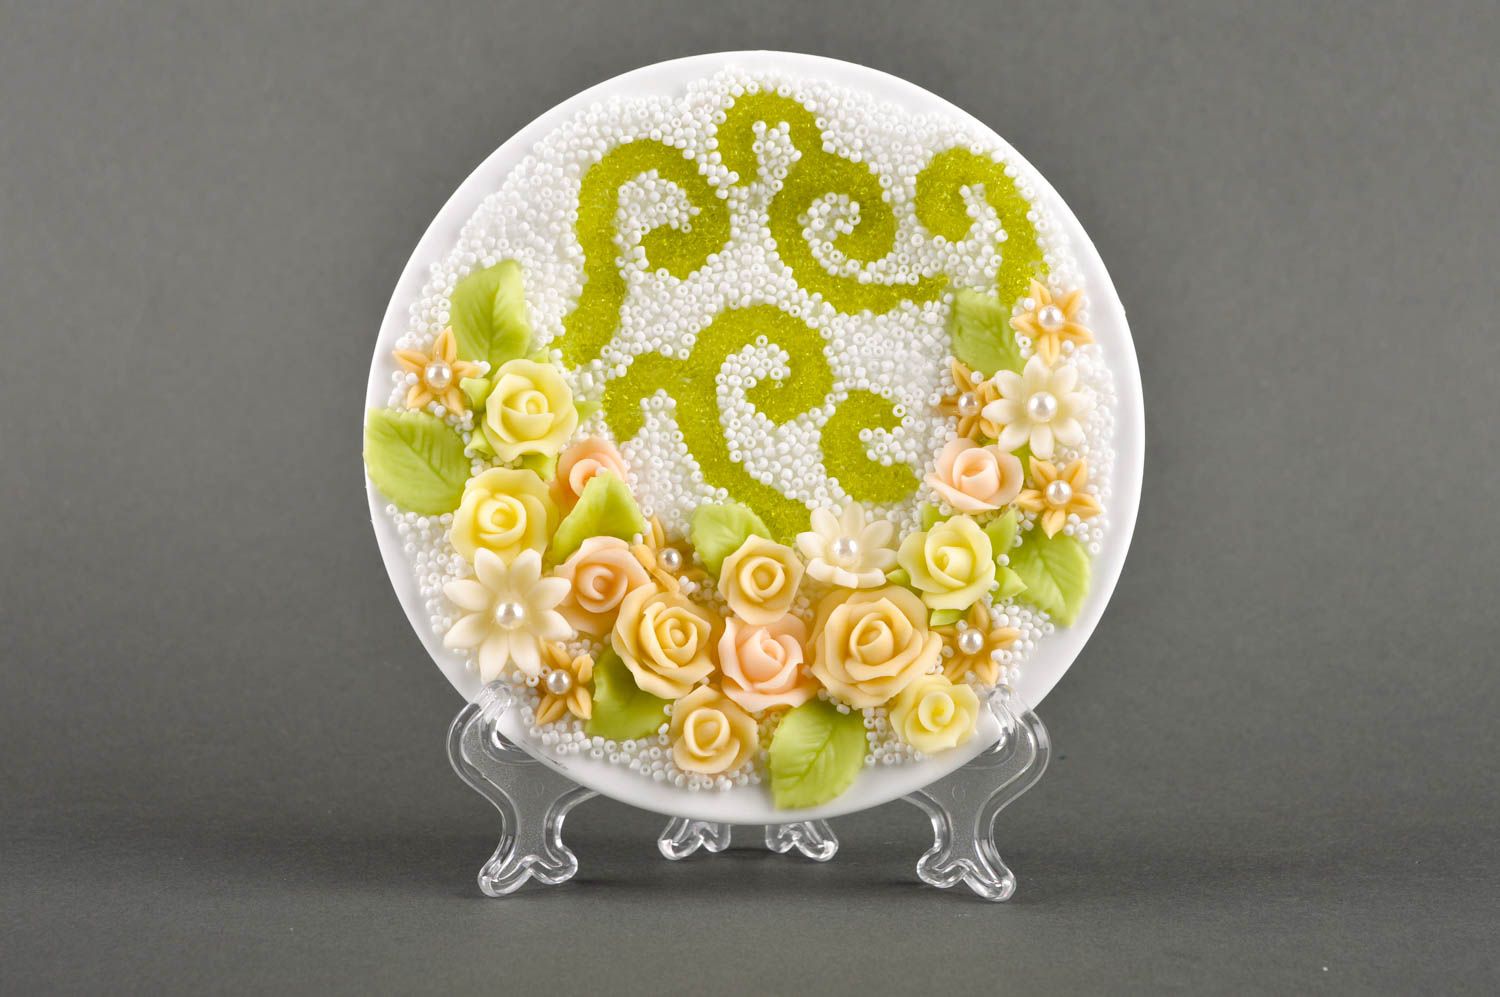 Свадебная тарелка хэнд мэйд посуда на свадьбу красивая посуда тарелка с цветами фото 1